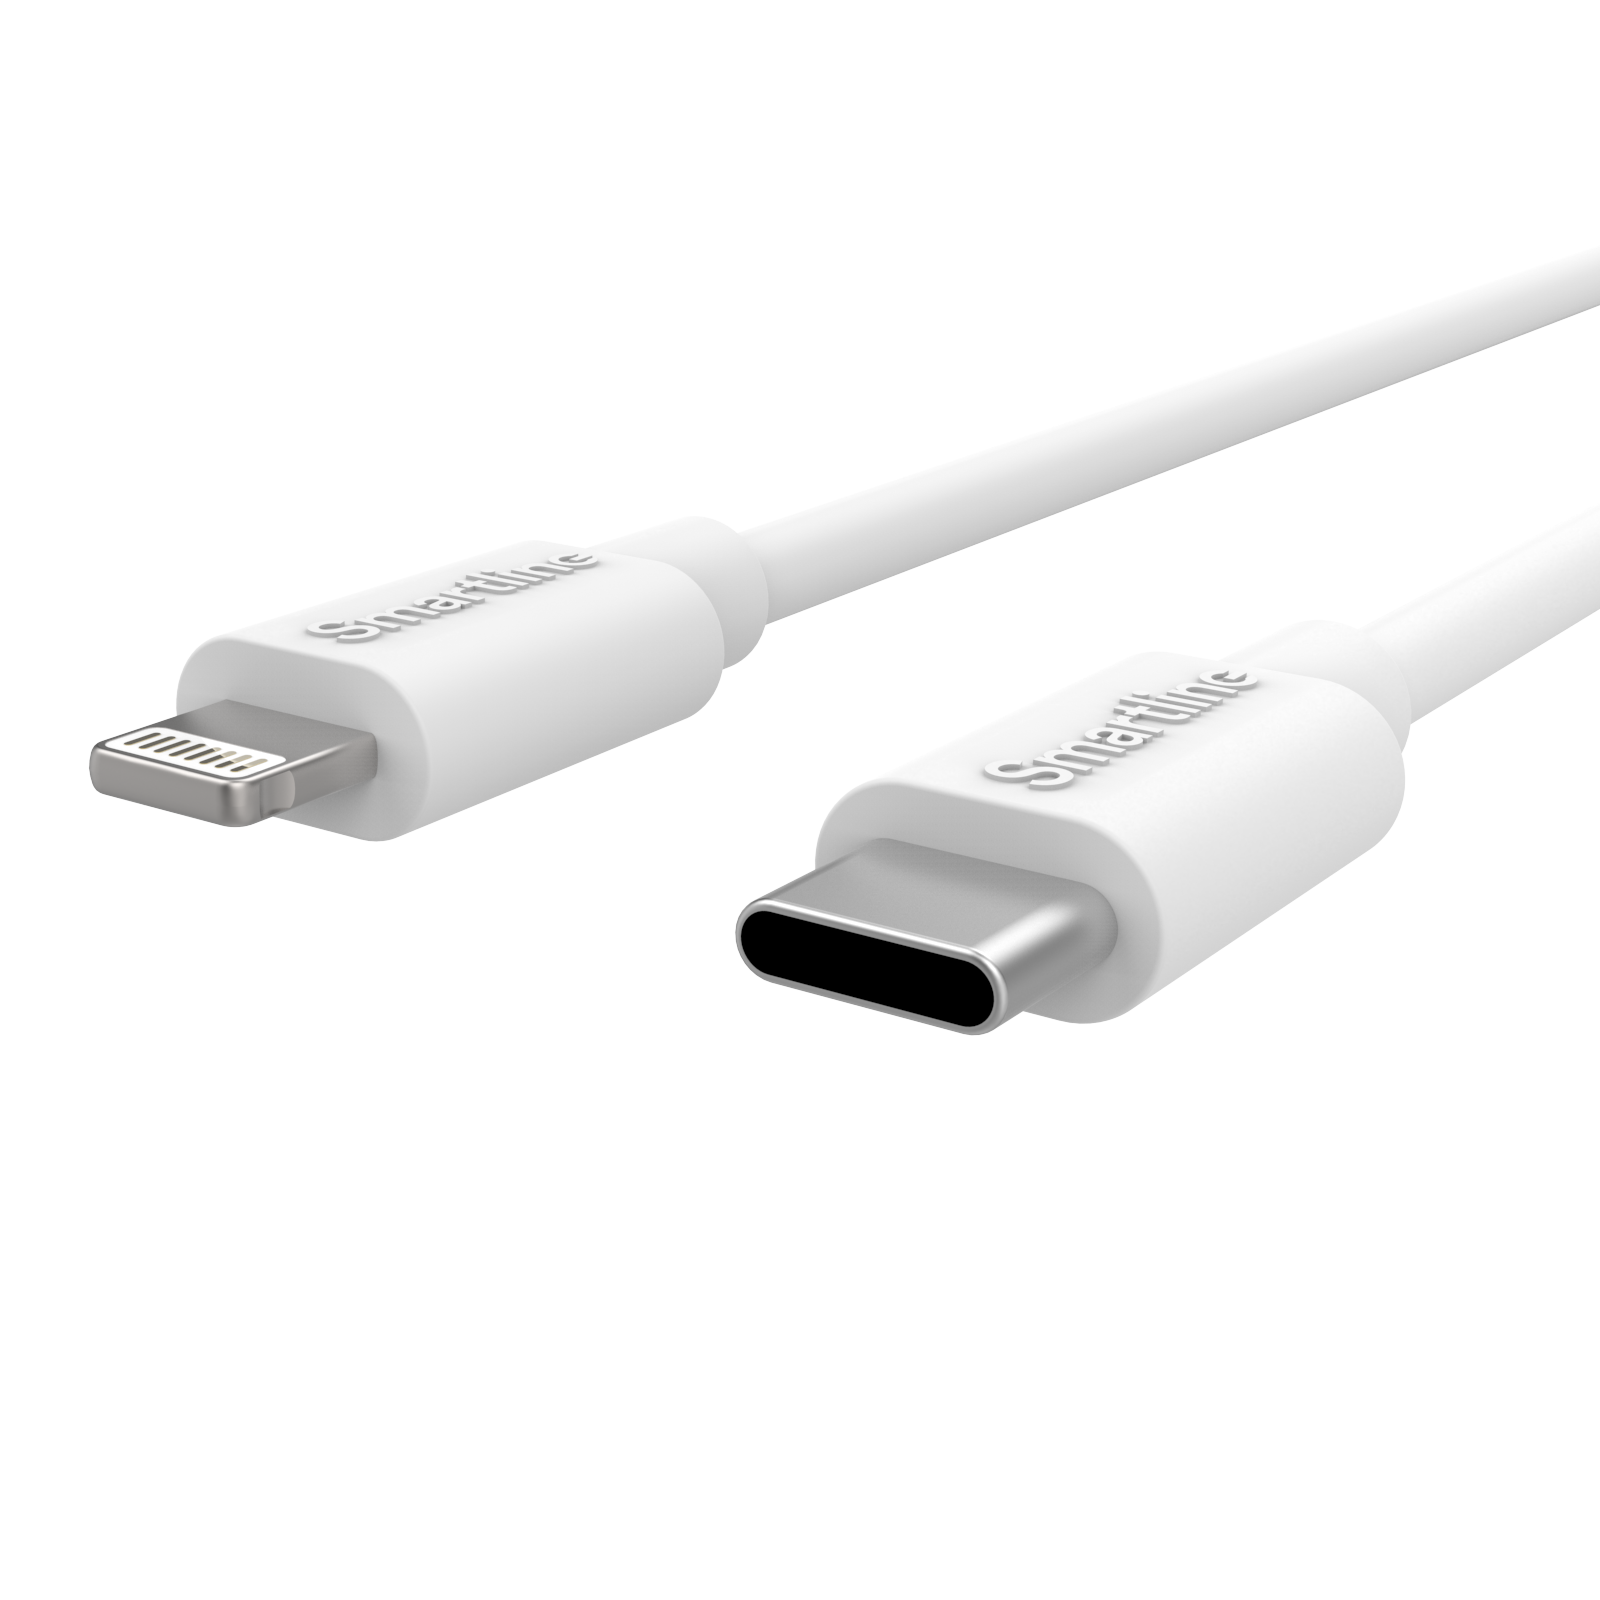 iPhone 14 Pro Kit för optimal laddning med 2m kabel, vit